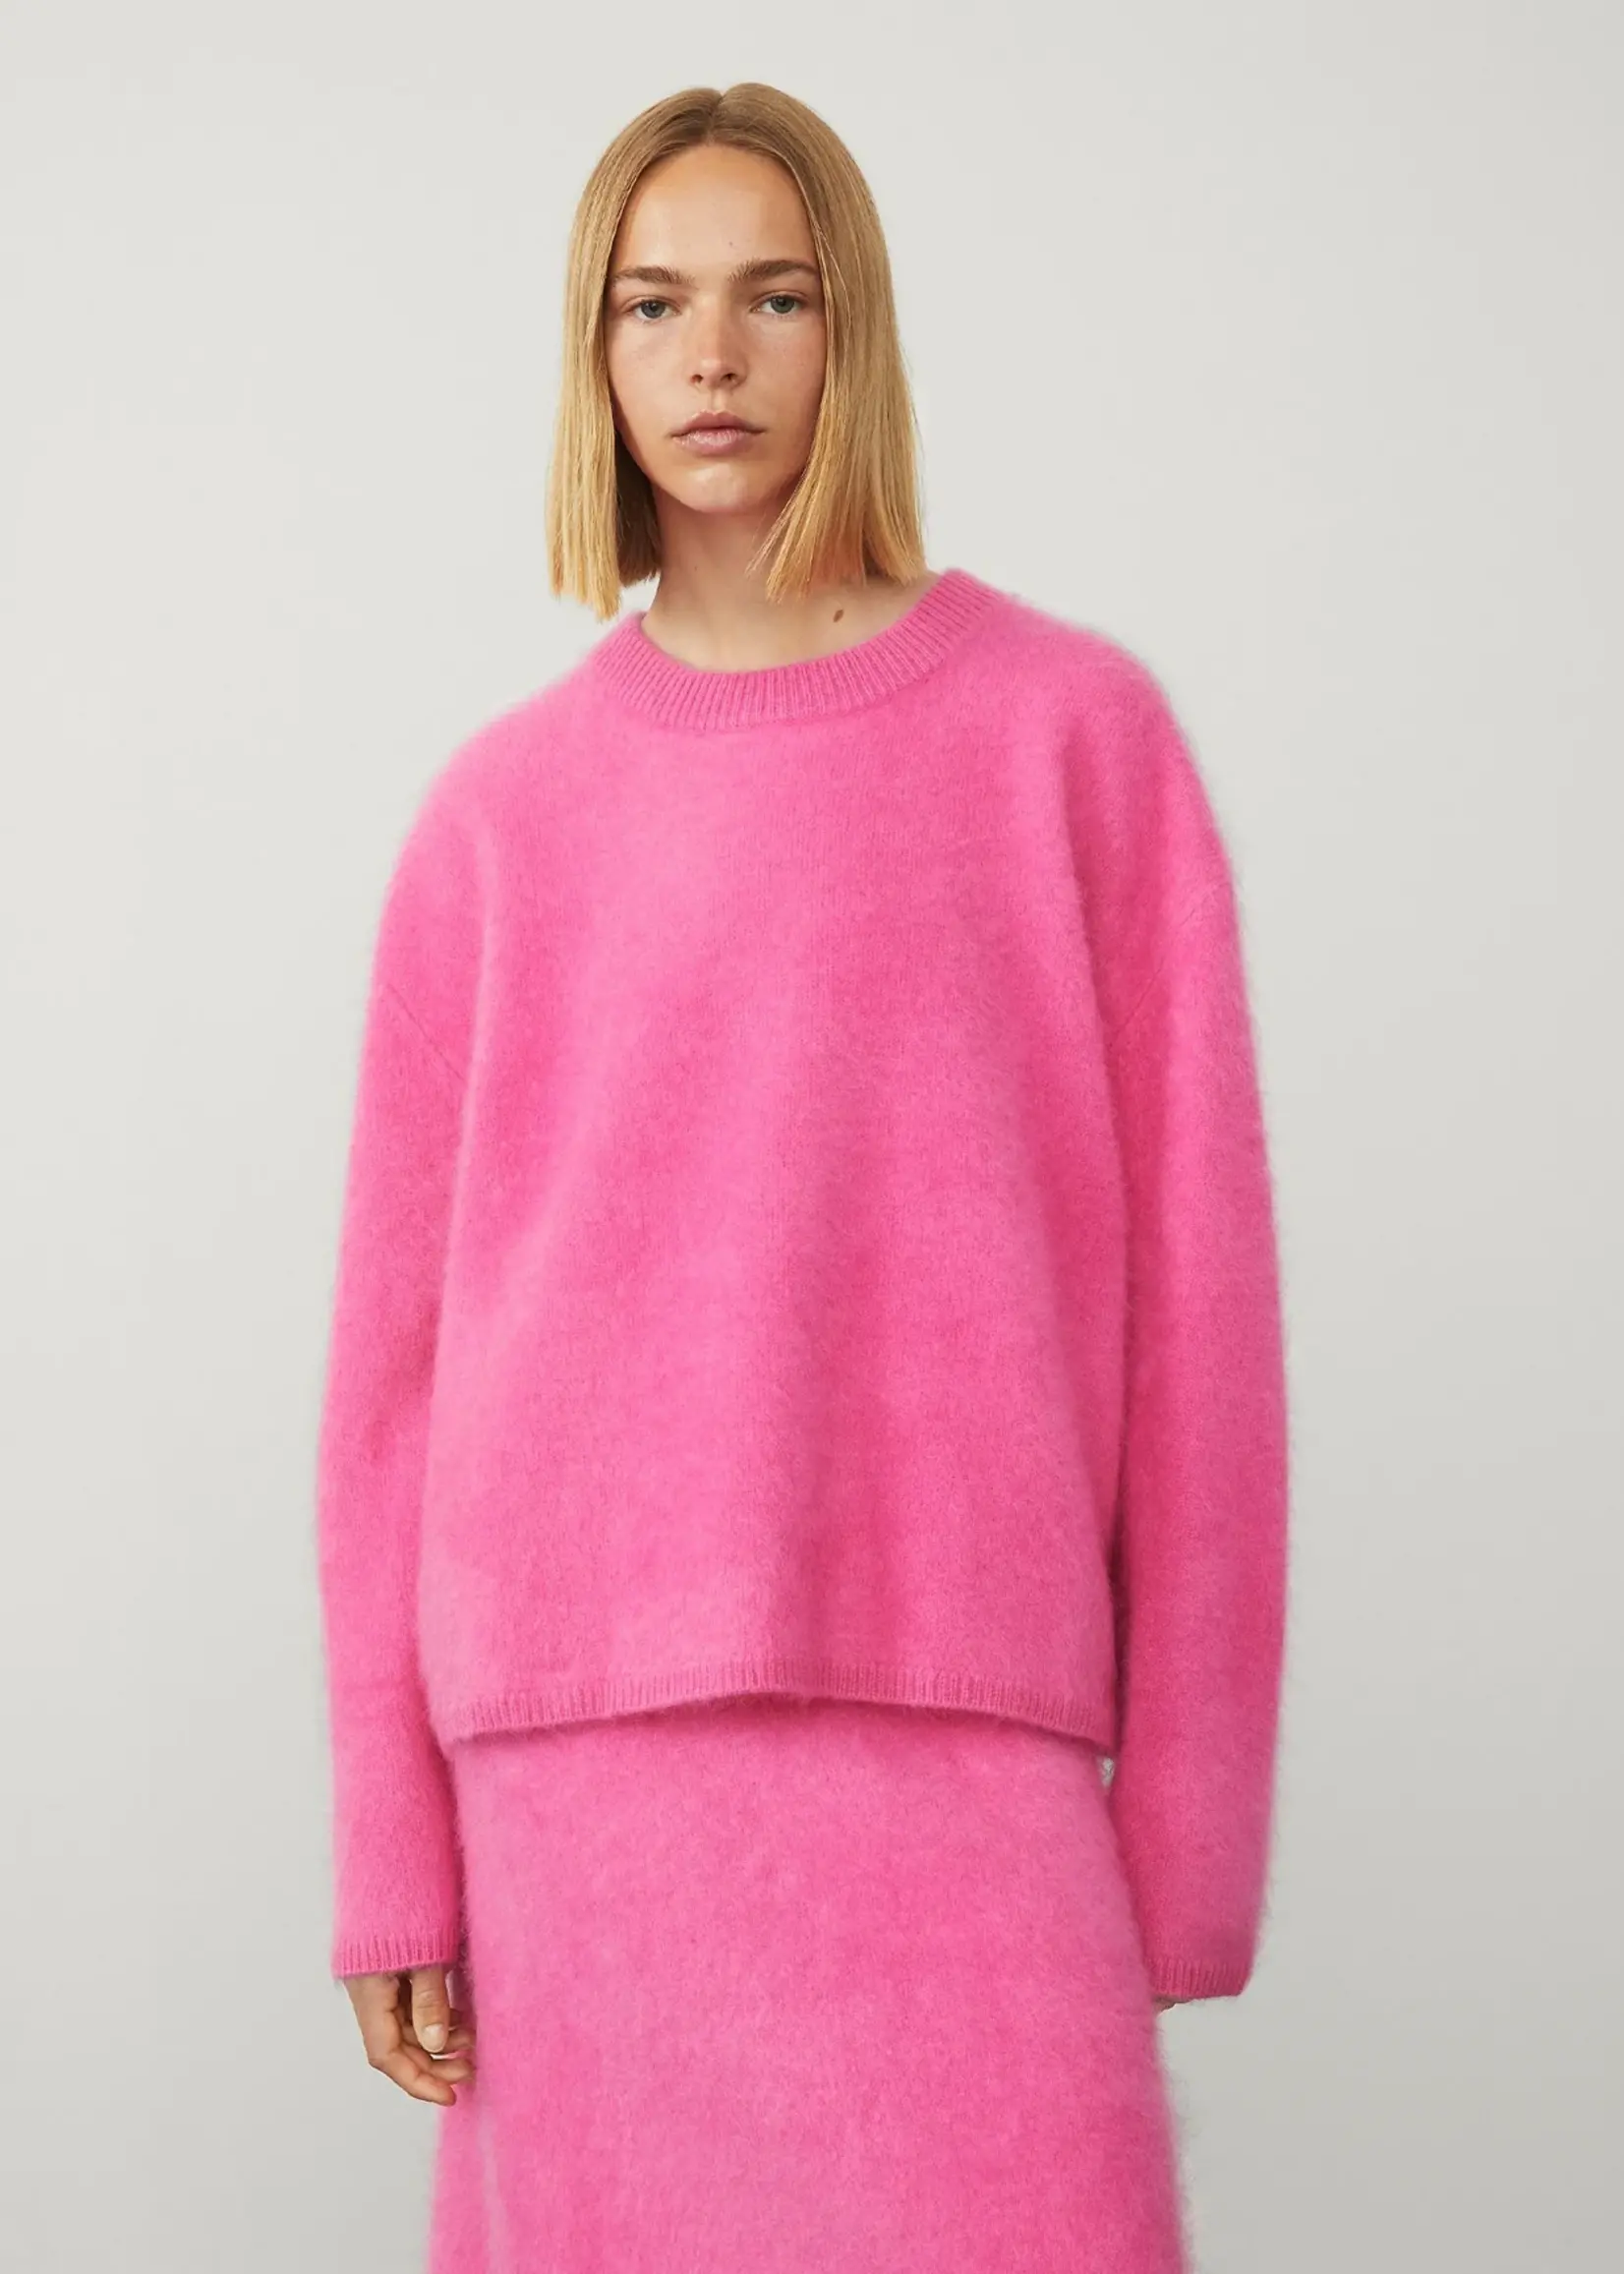 Lisa Yang Natalia sweater - Bright rosa